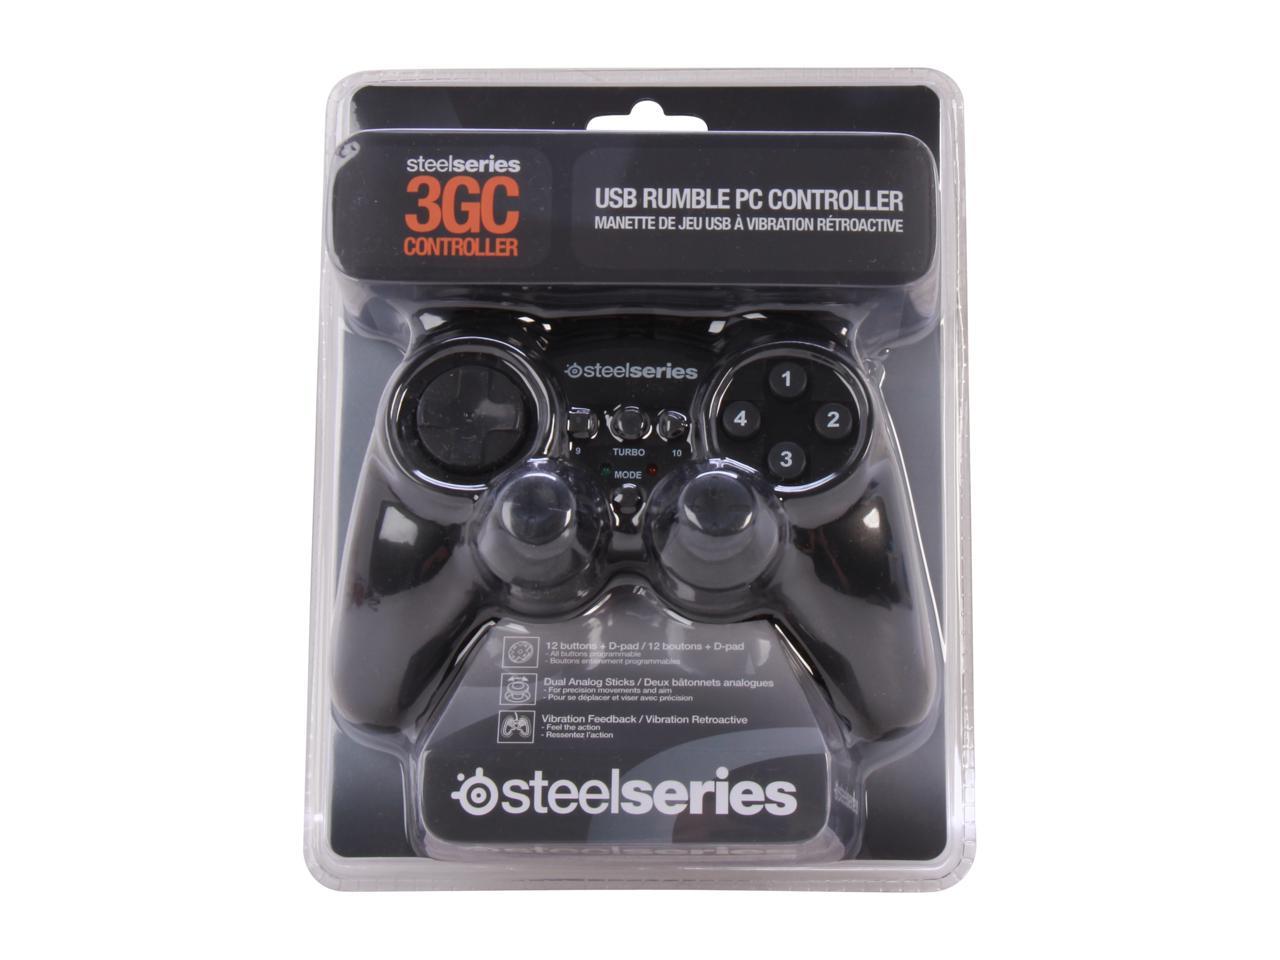 steelseries 3gc controller setup